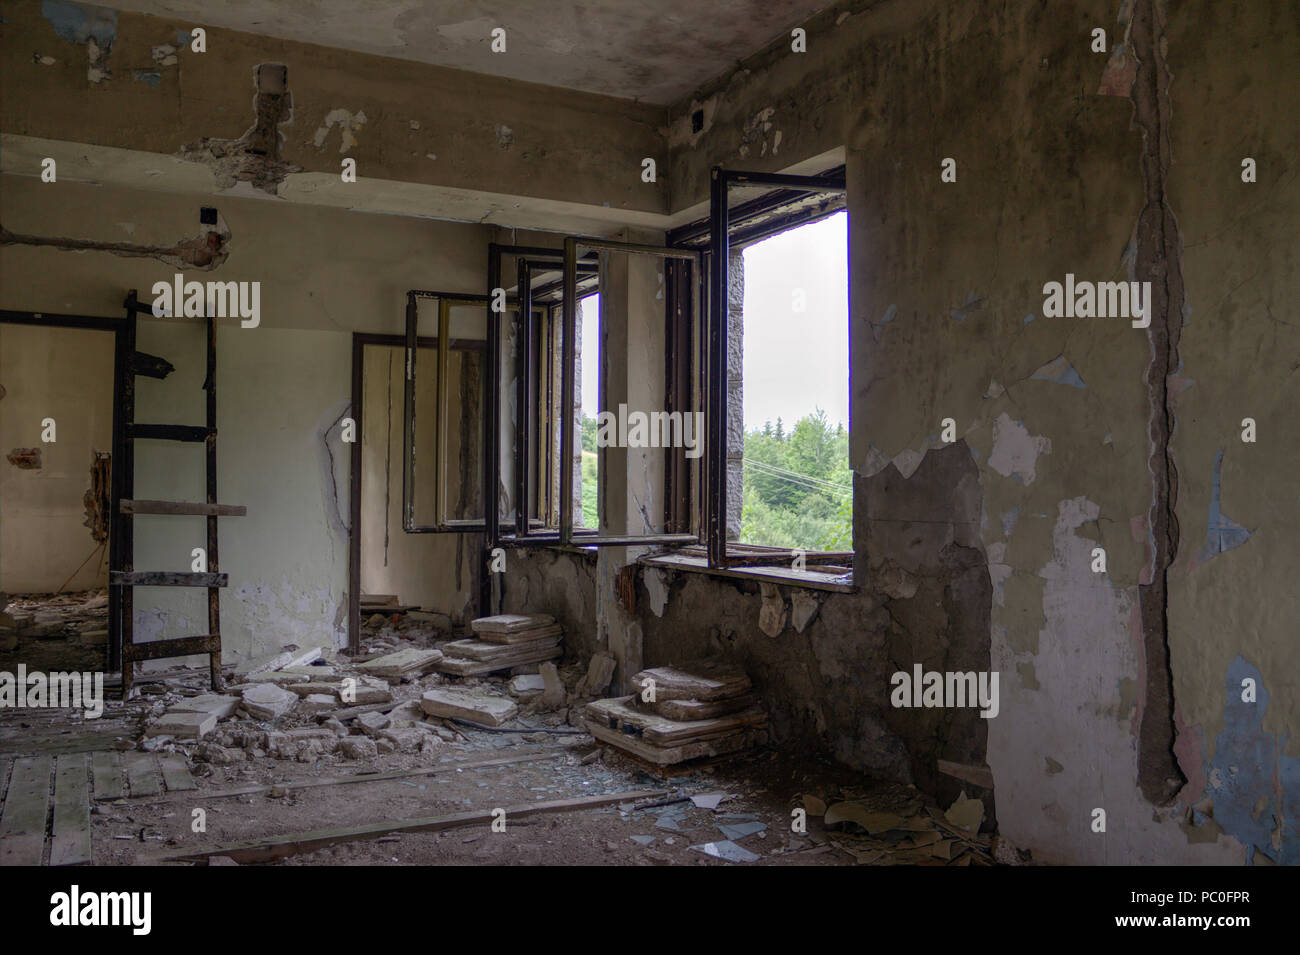 TARA National Park, Western Serbia, July 2018 - Interior of abandoned and decaying Hotel Tara from 1935 Stock Photo